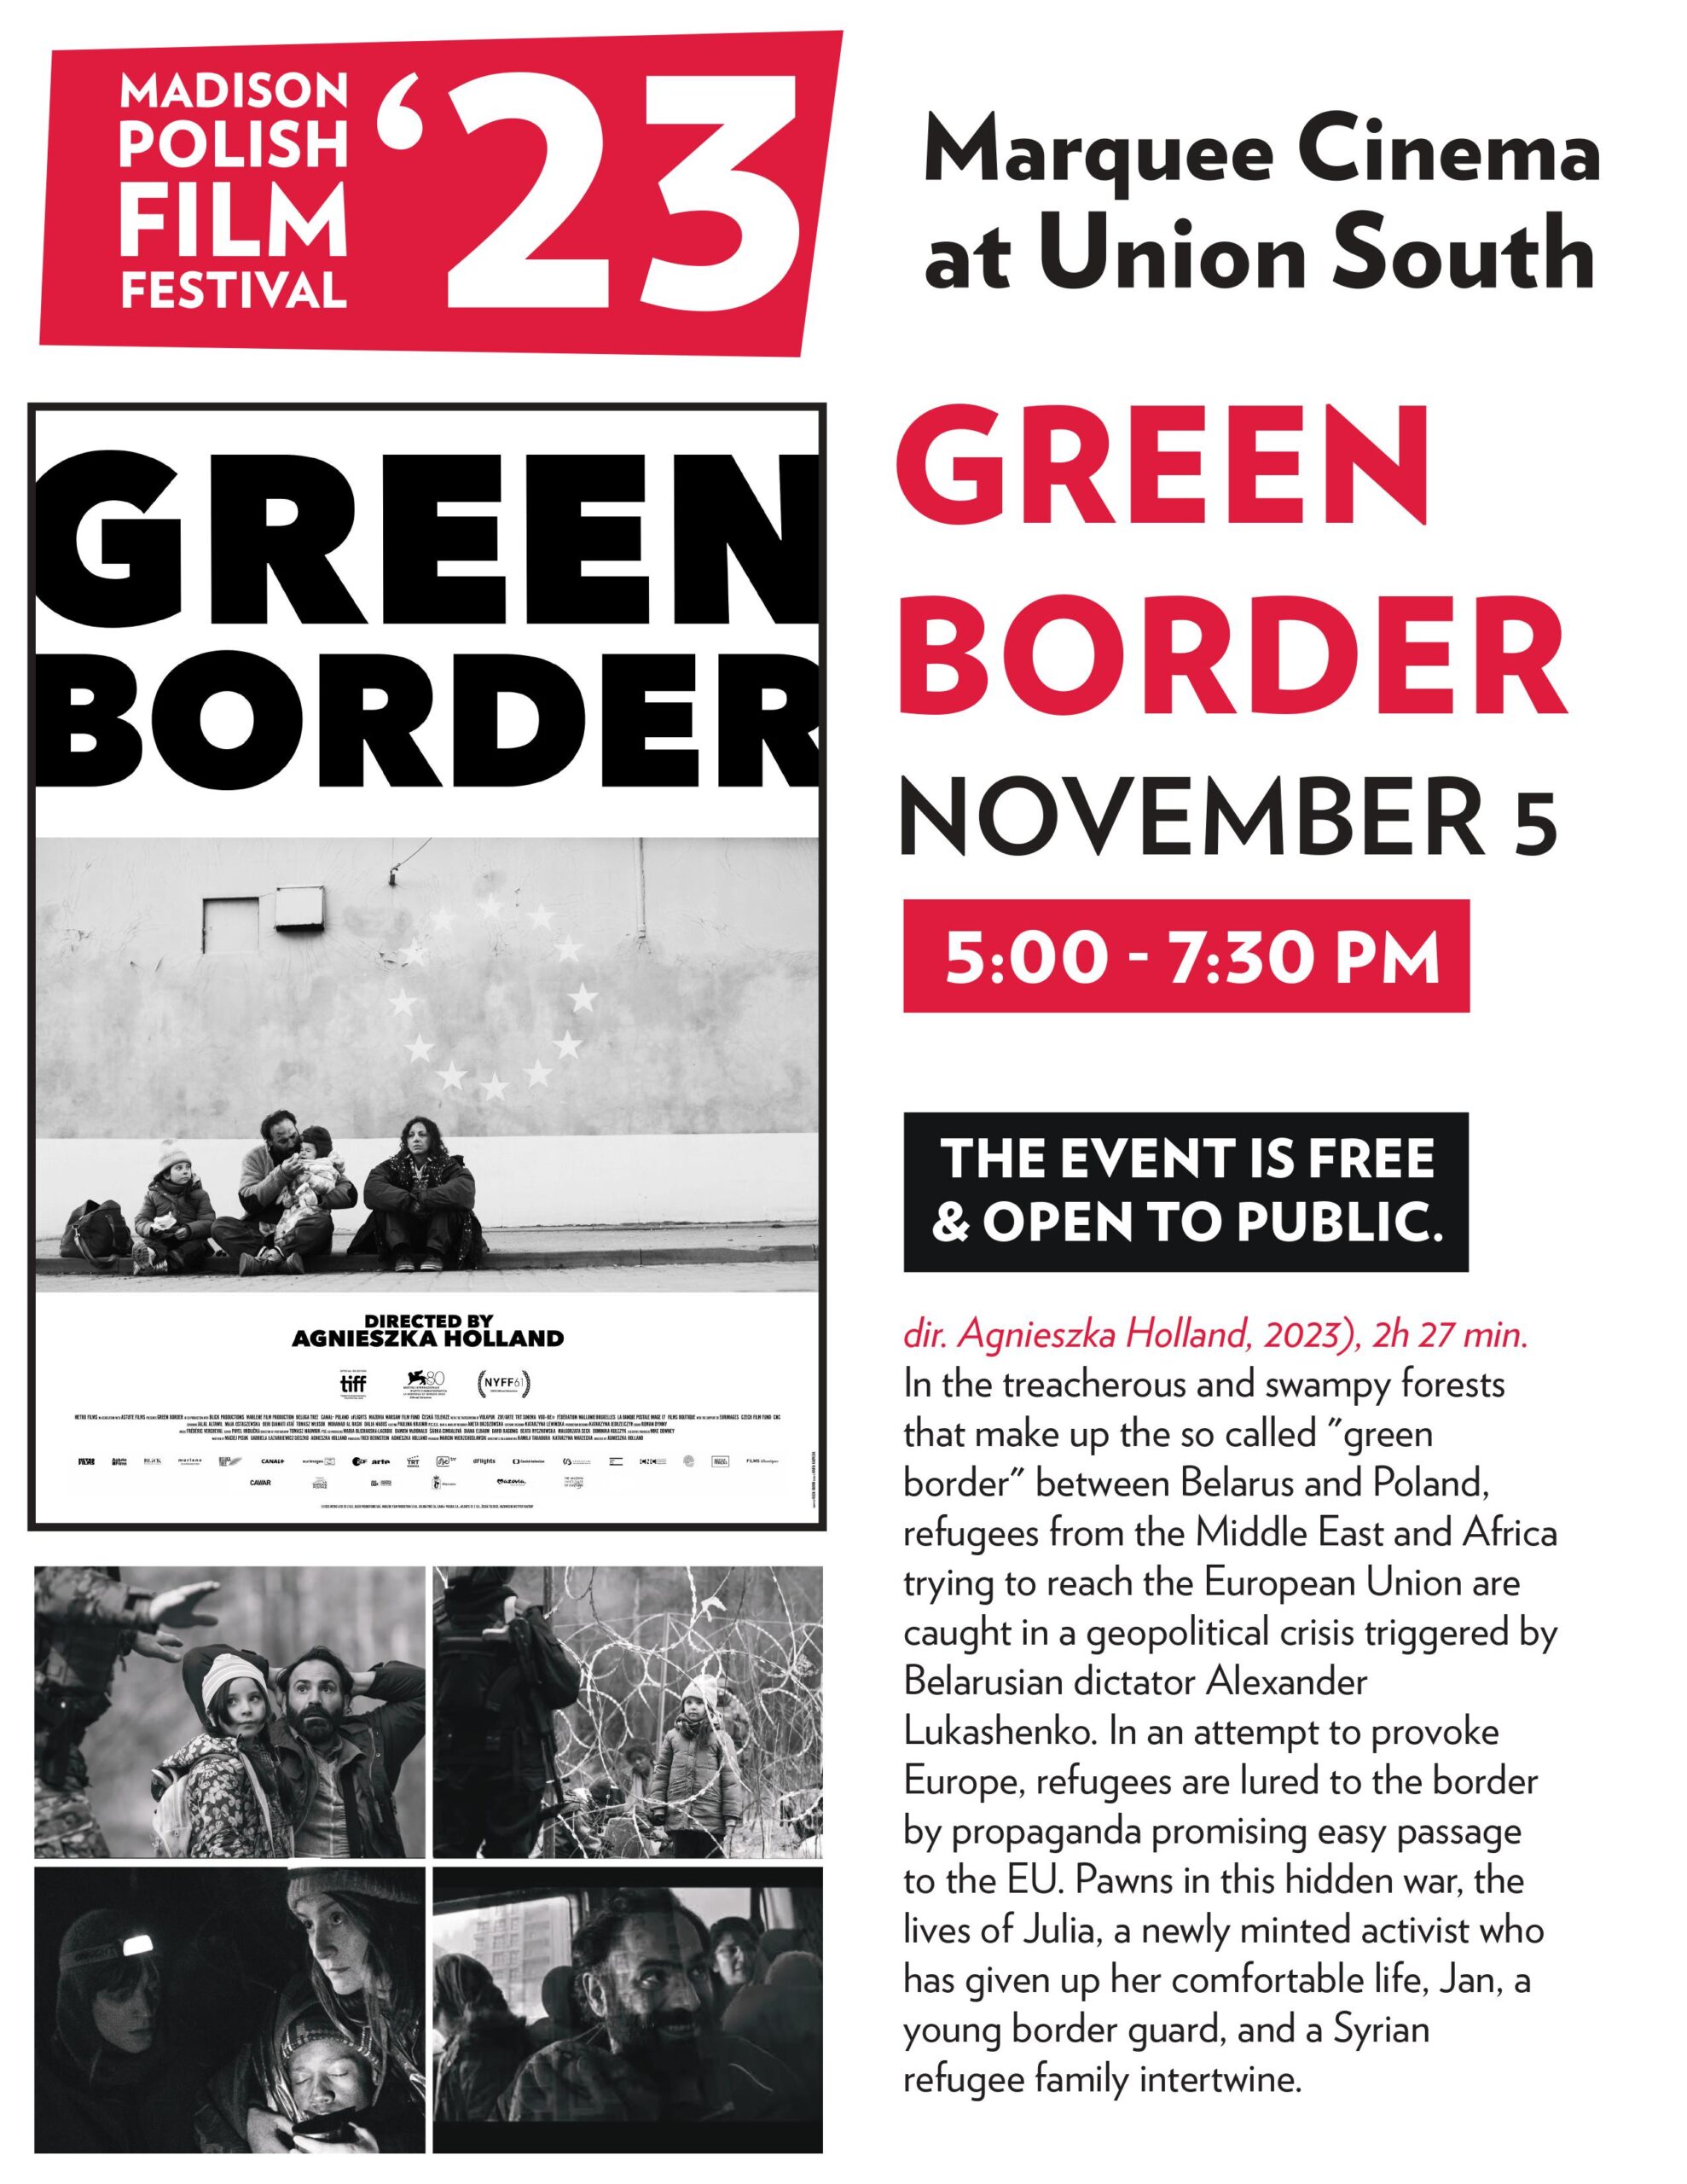 Green Border (Zielona granica, 2023) by Agnieszka Holland (2023 Madison Polish Film Festival)